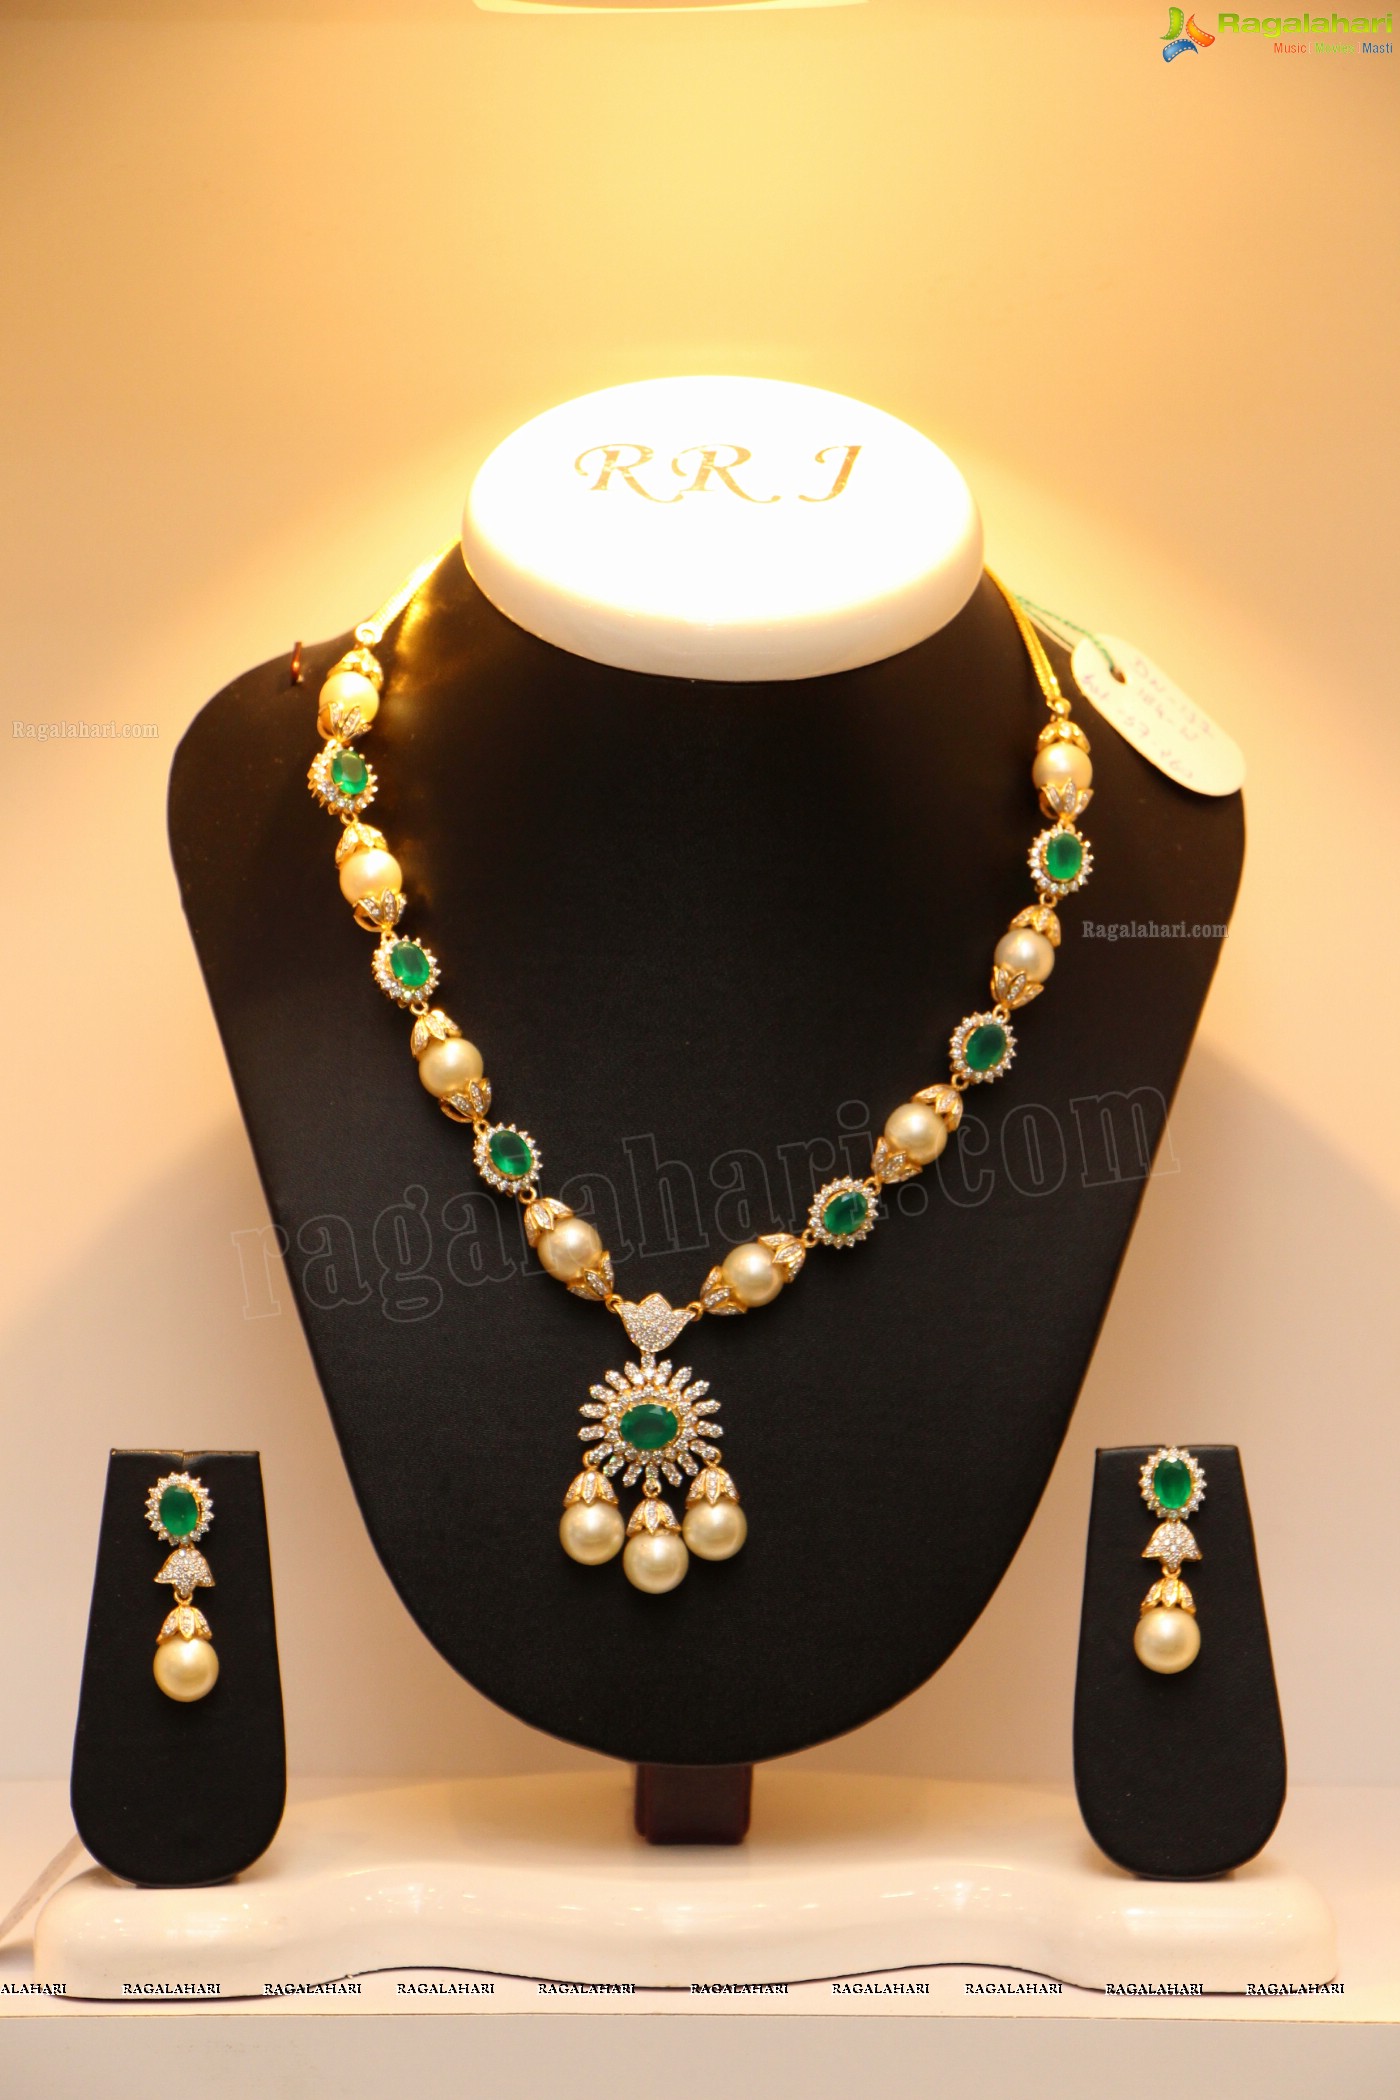 Radha Ghantasala's RR Jewellers Launch, Hyderabad